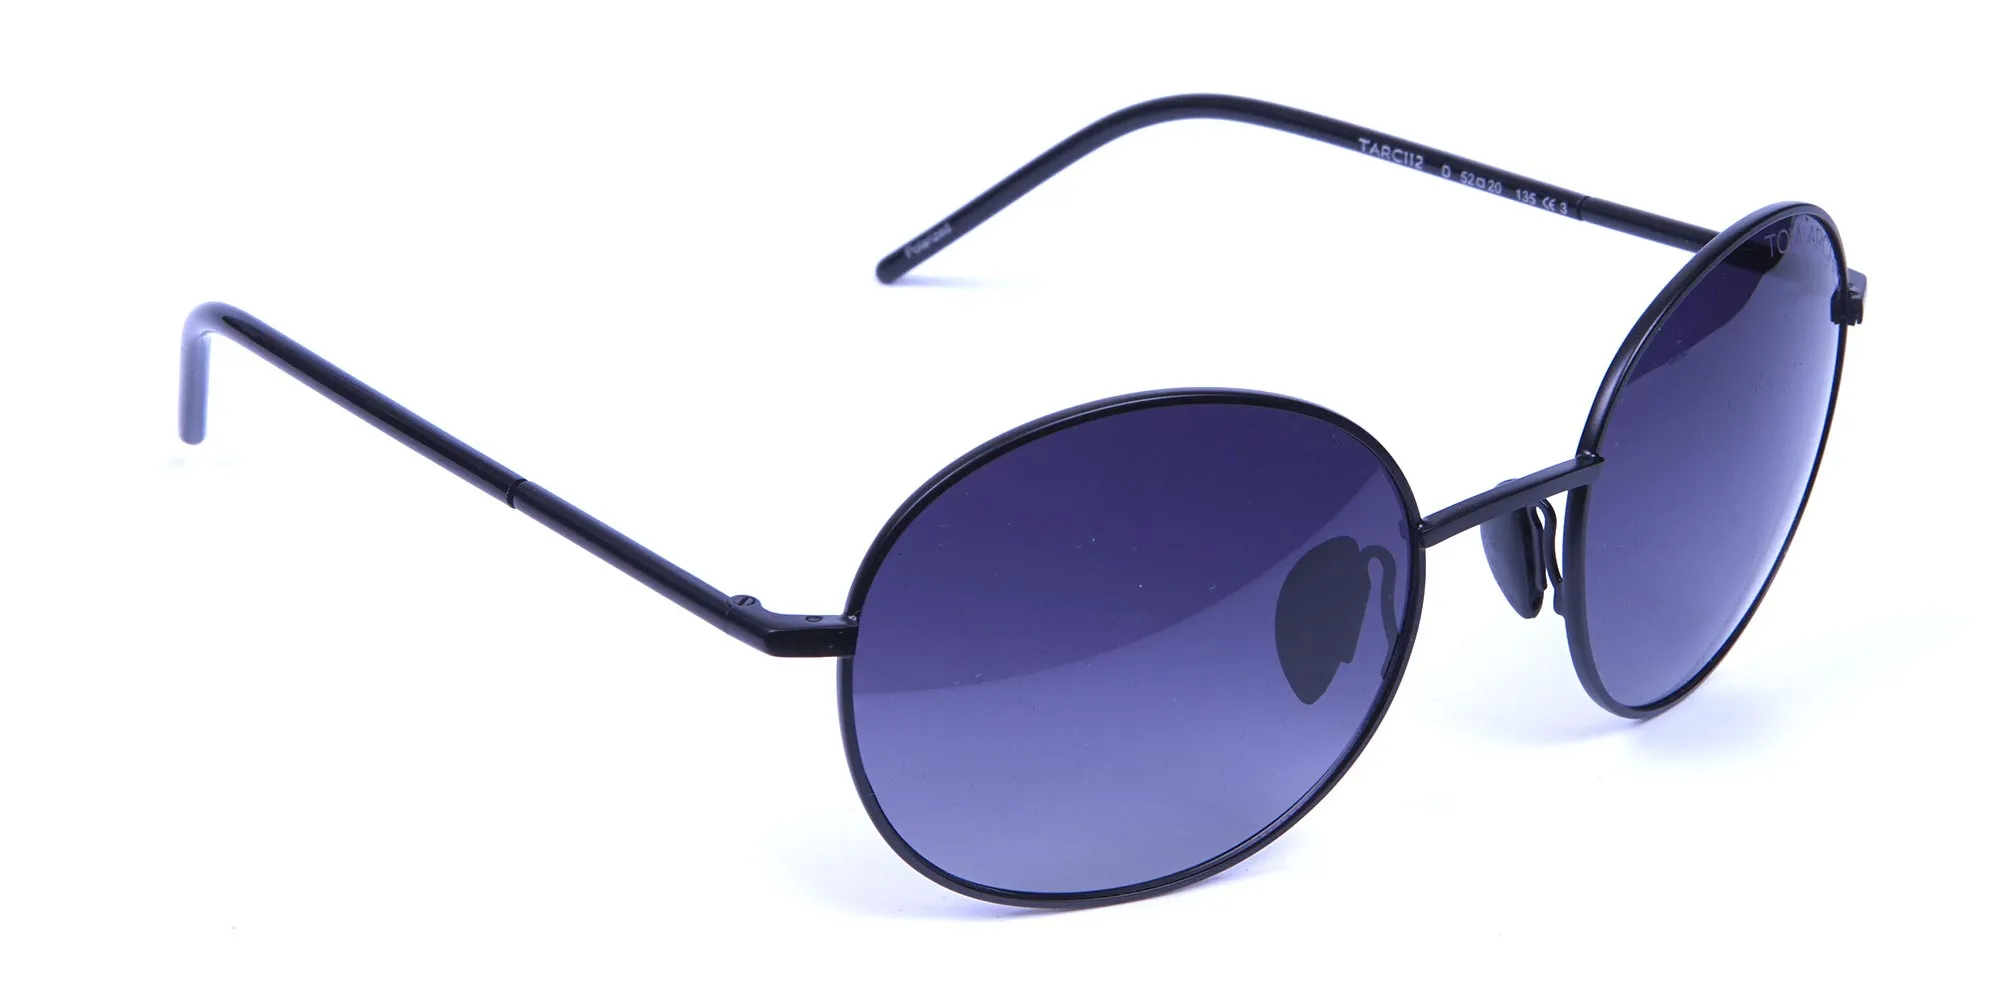 Black & Grey Sunglasses Round Frame